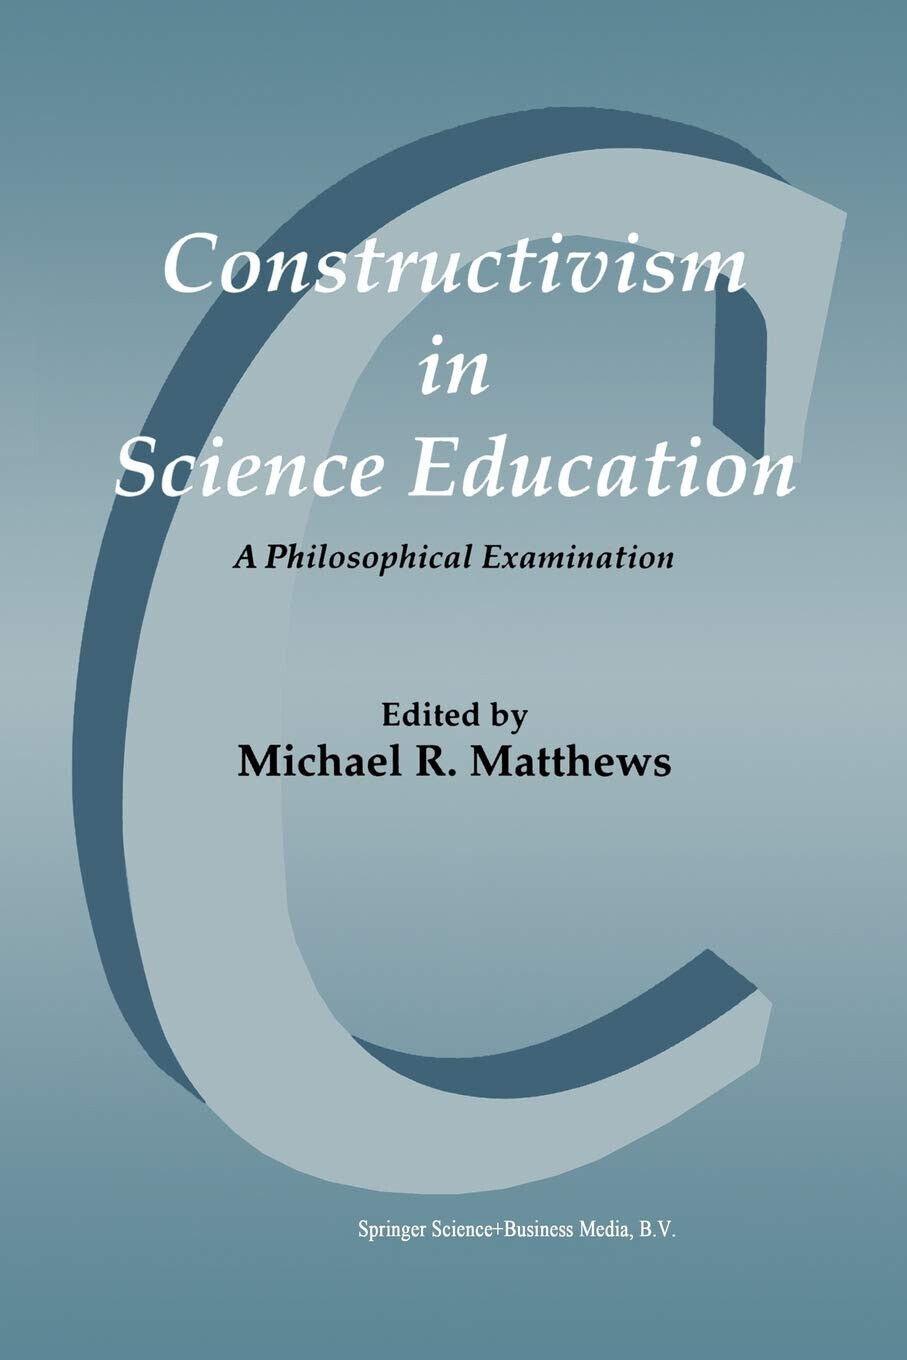 Constructivism in Science Education - Michael R. Matthews - Springer, 1998